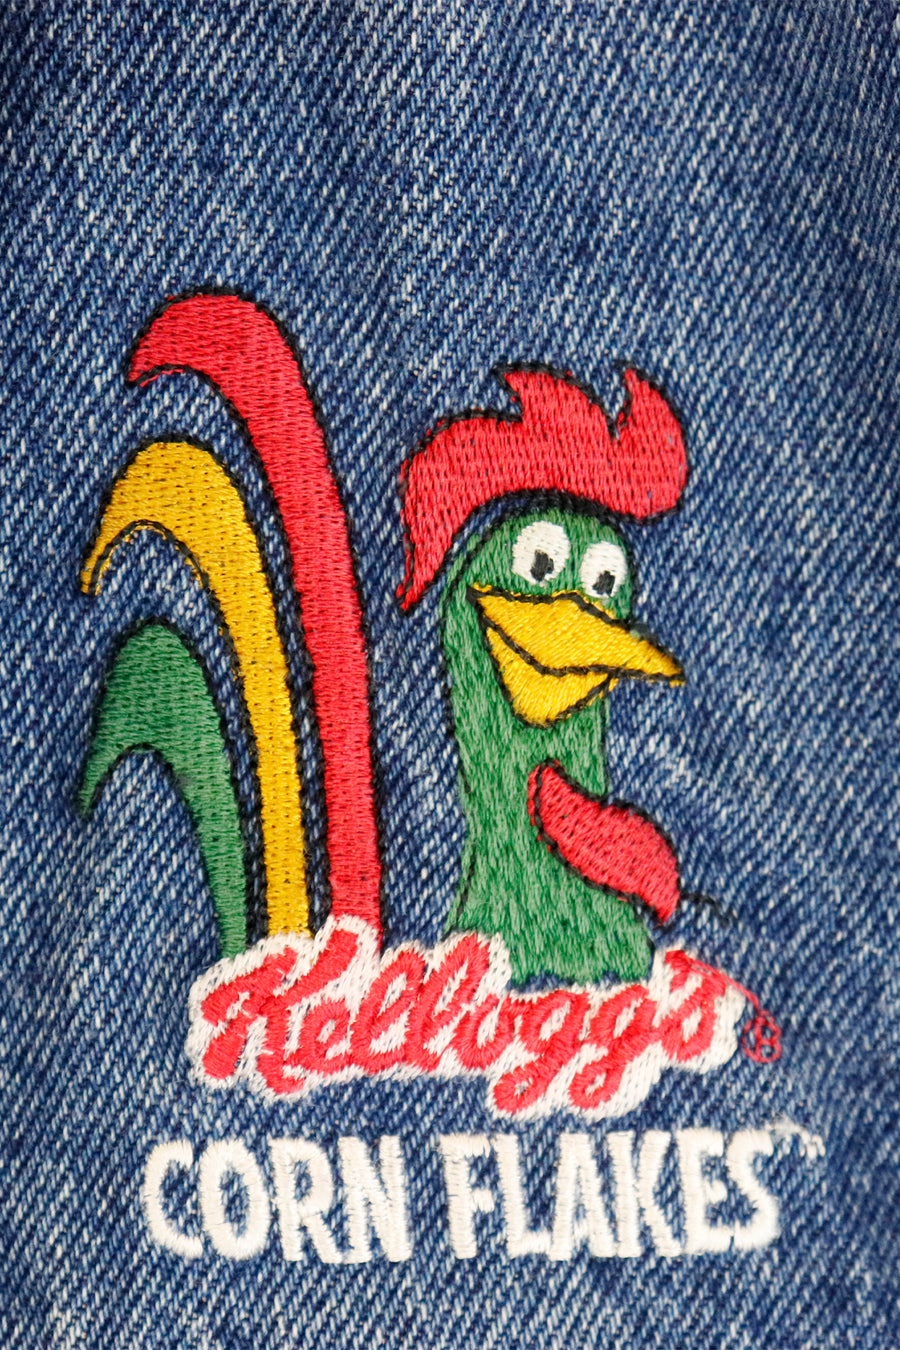 Vintage Kellogs Corn Flakes Embroidered Leather Collar Denim Jacket Sz XL